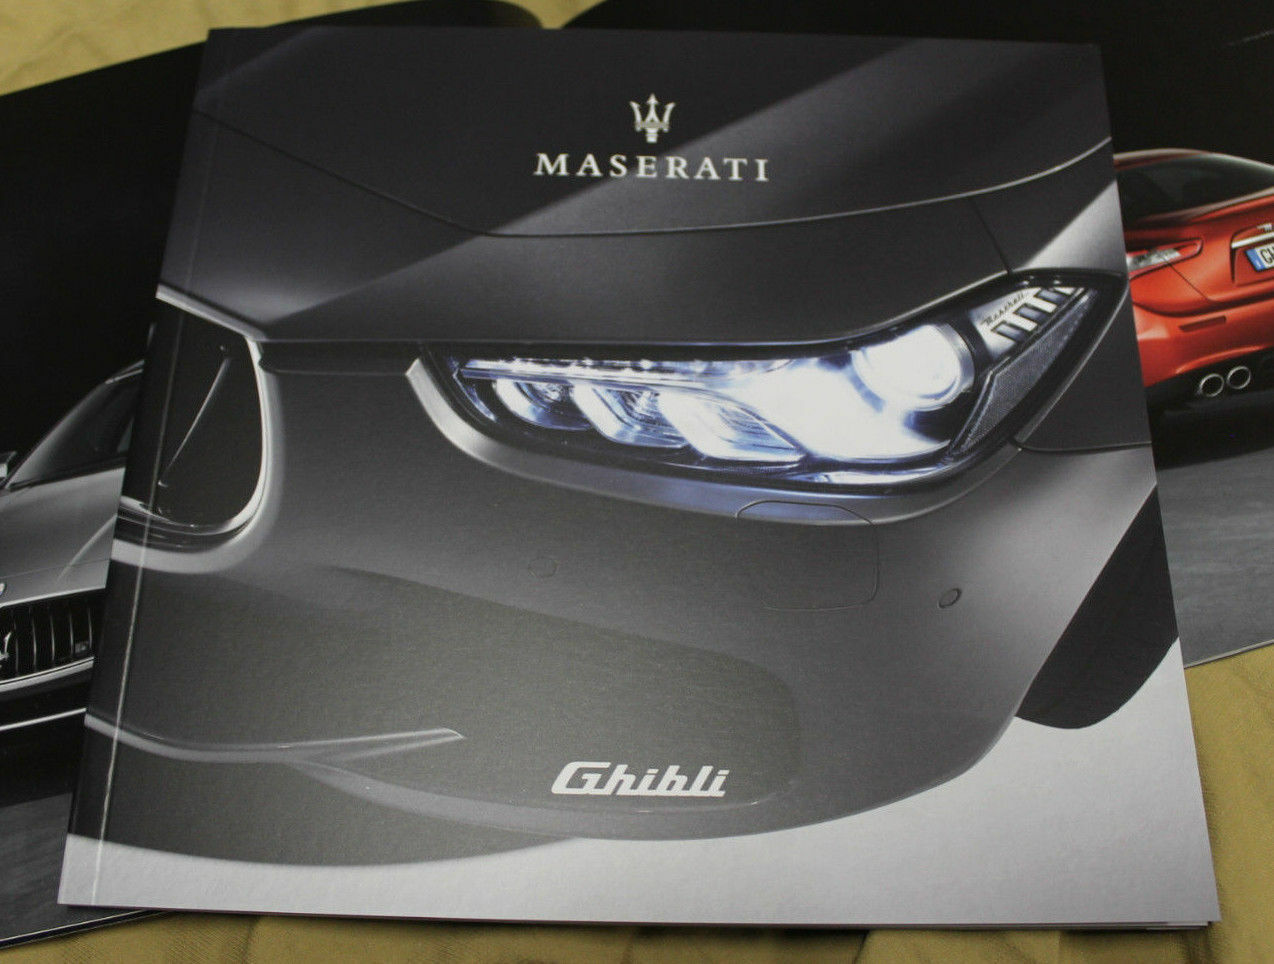 2017 Maserati Ghibli brochure